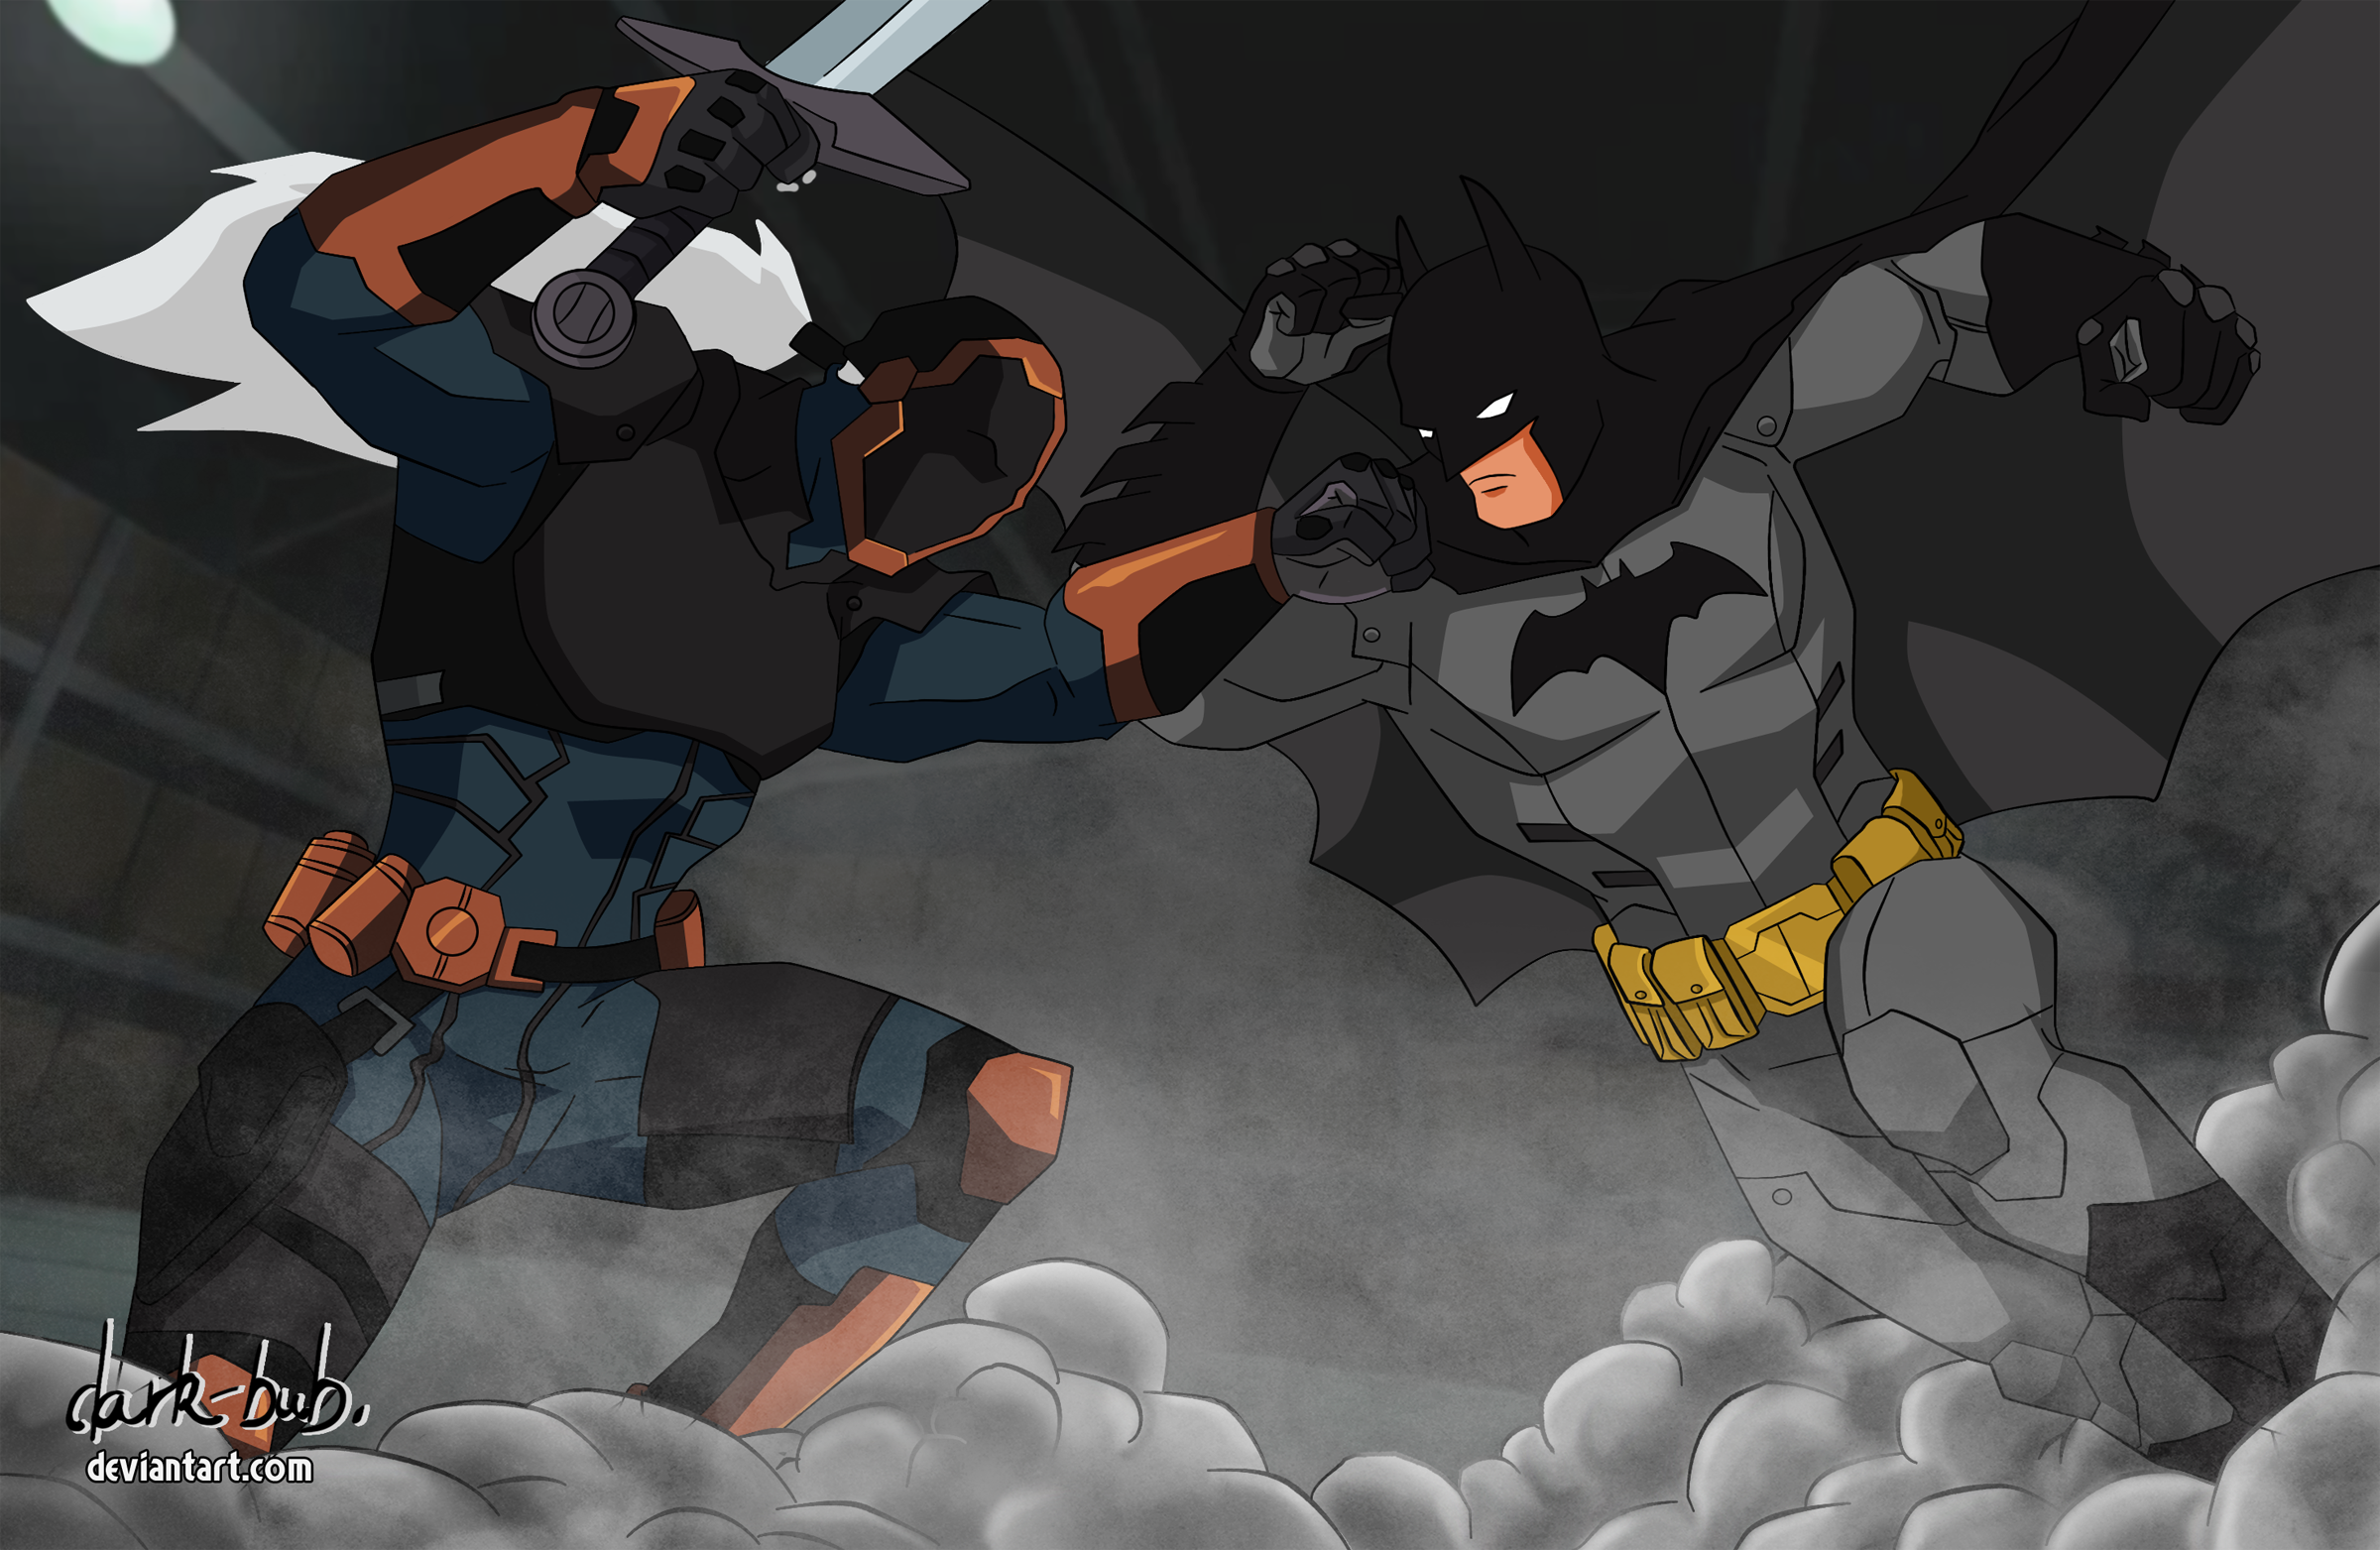 Batman vs Deathstroke - Young Justice style by dark-BuB on DeviantArt